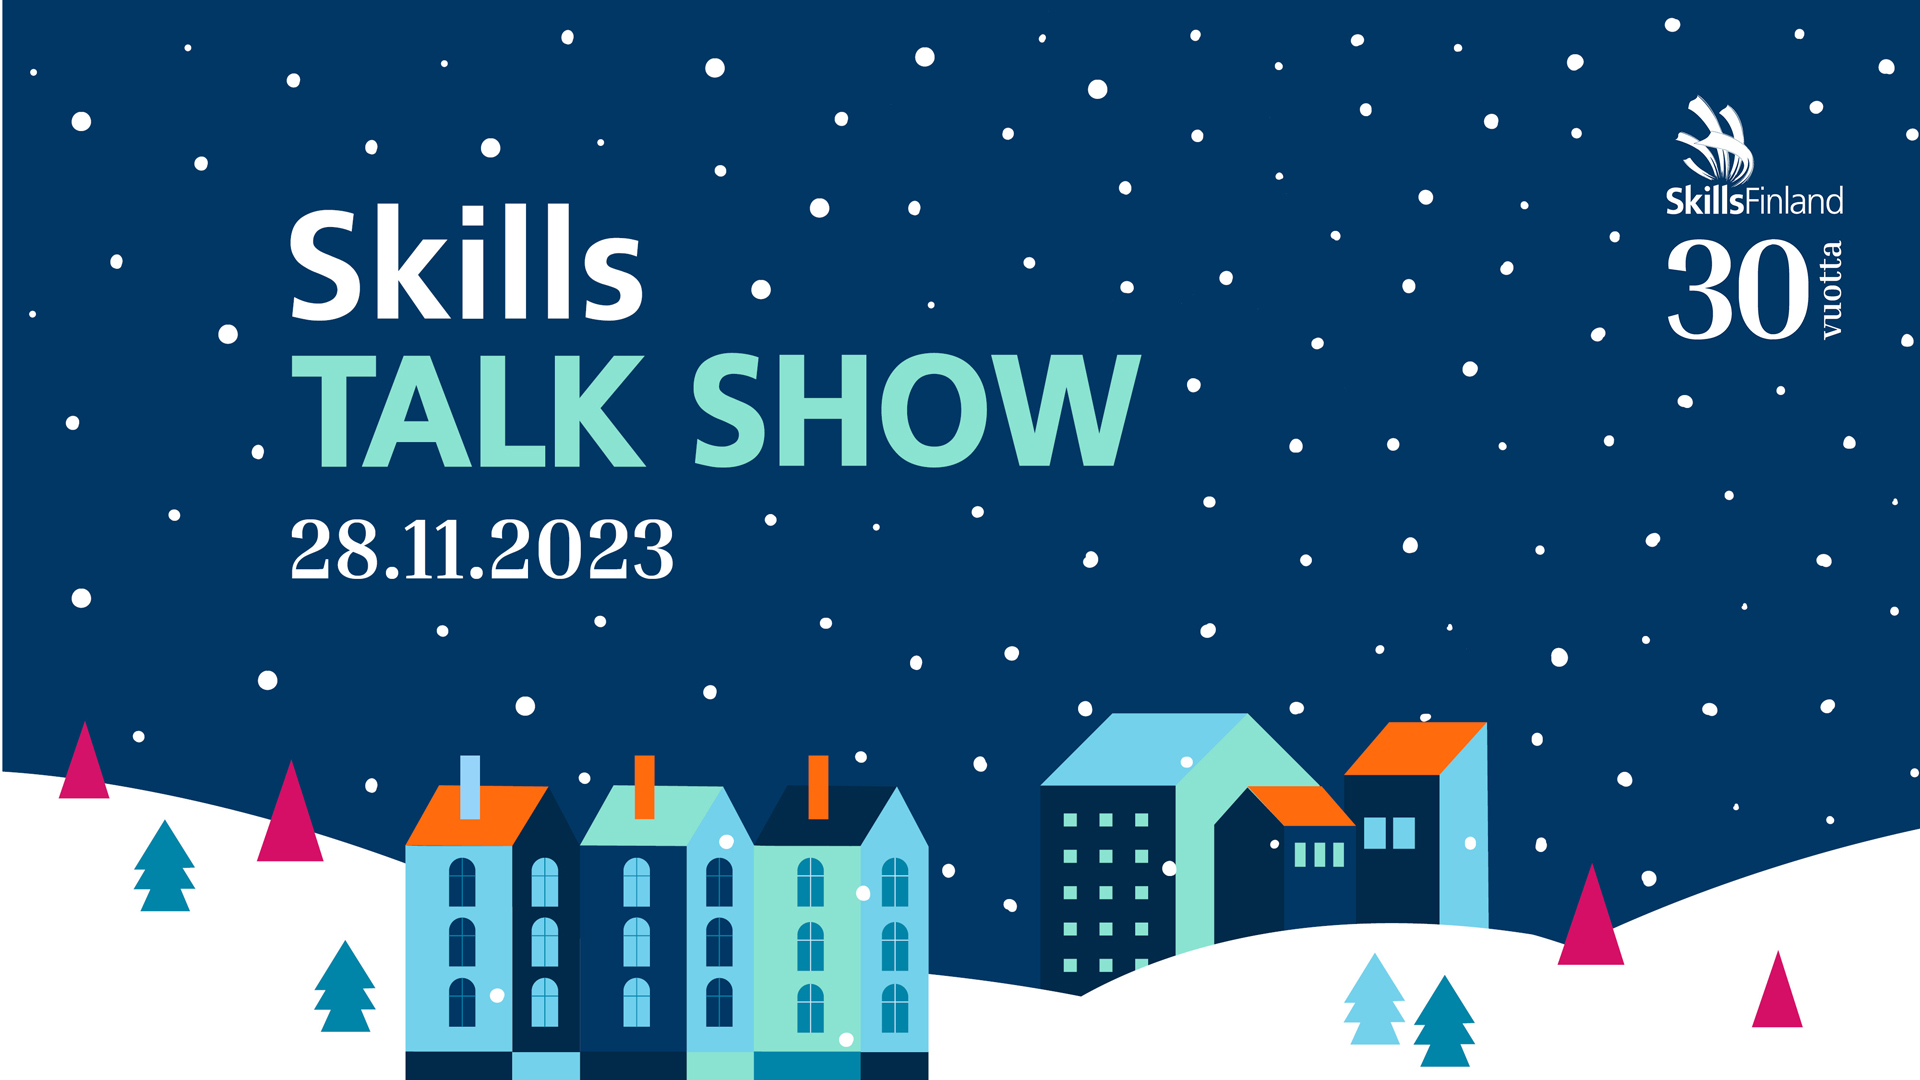 Skills_Finland_TalkShow2023_tapahtumailme.jpg